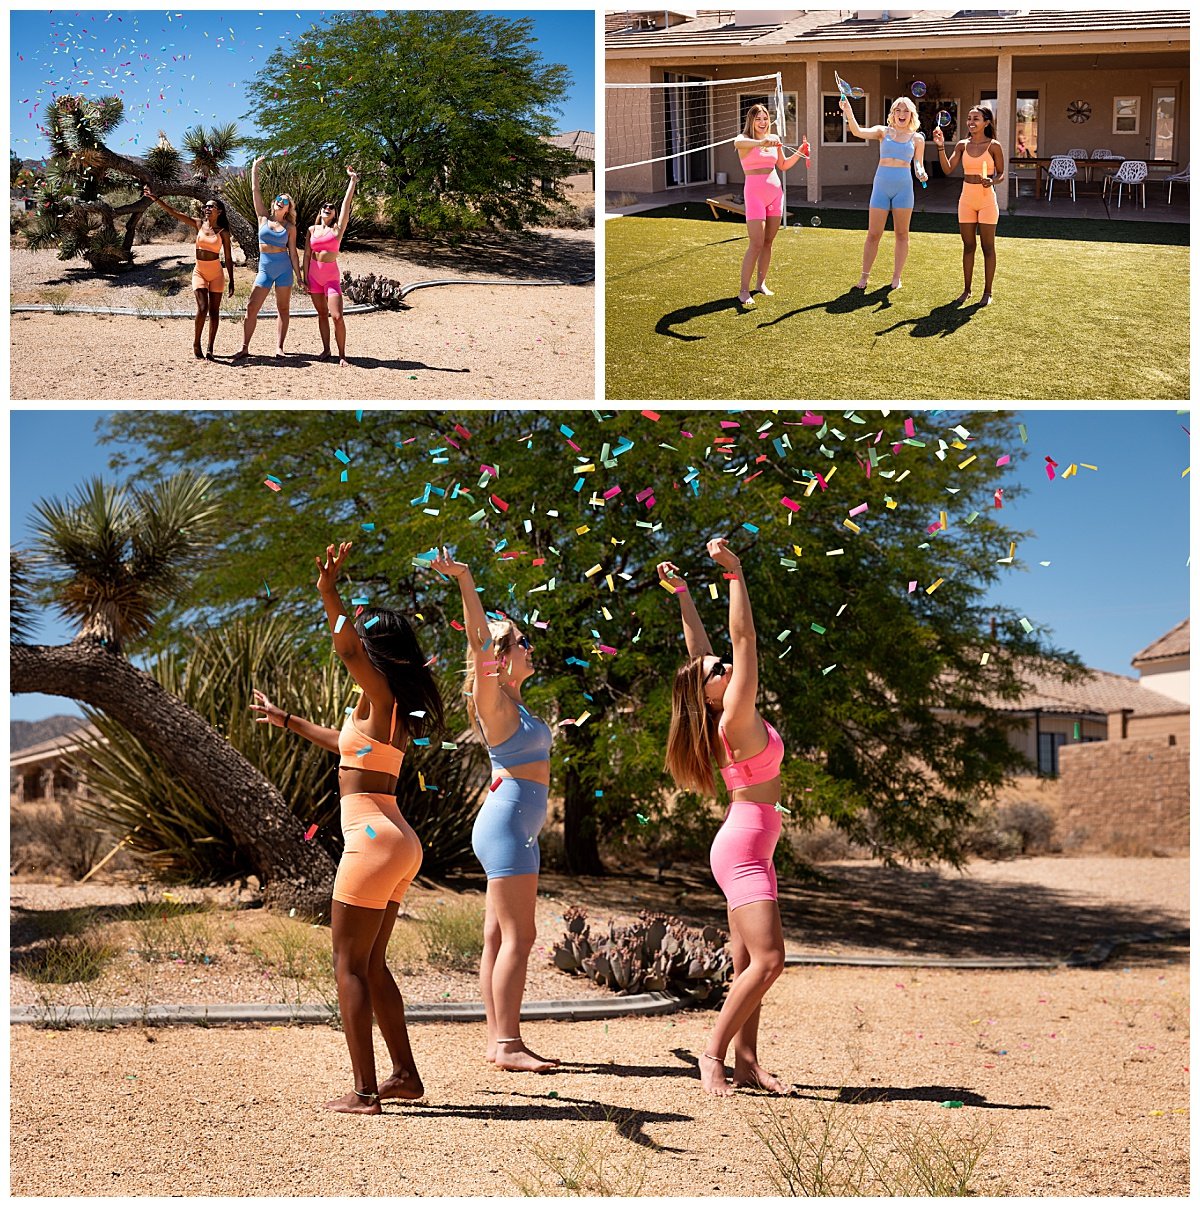 Backyard photo shoot in Joshua Tree California with three girls jumping in confetti.